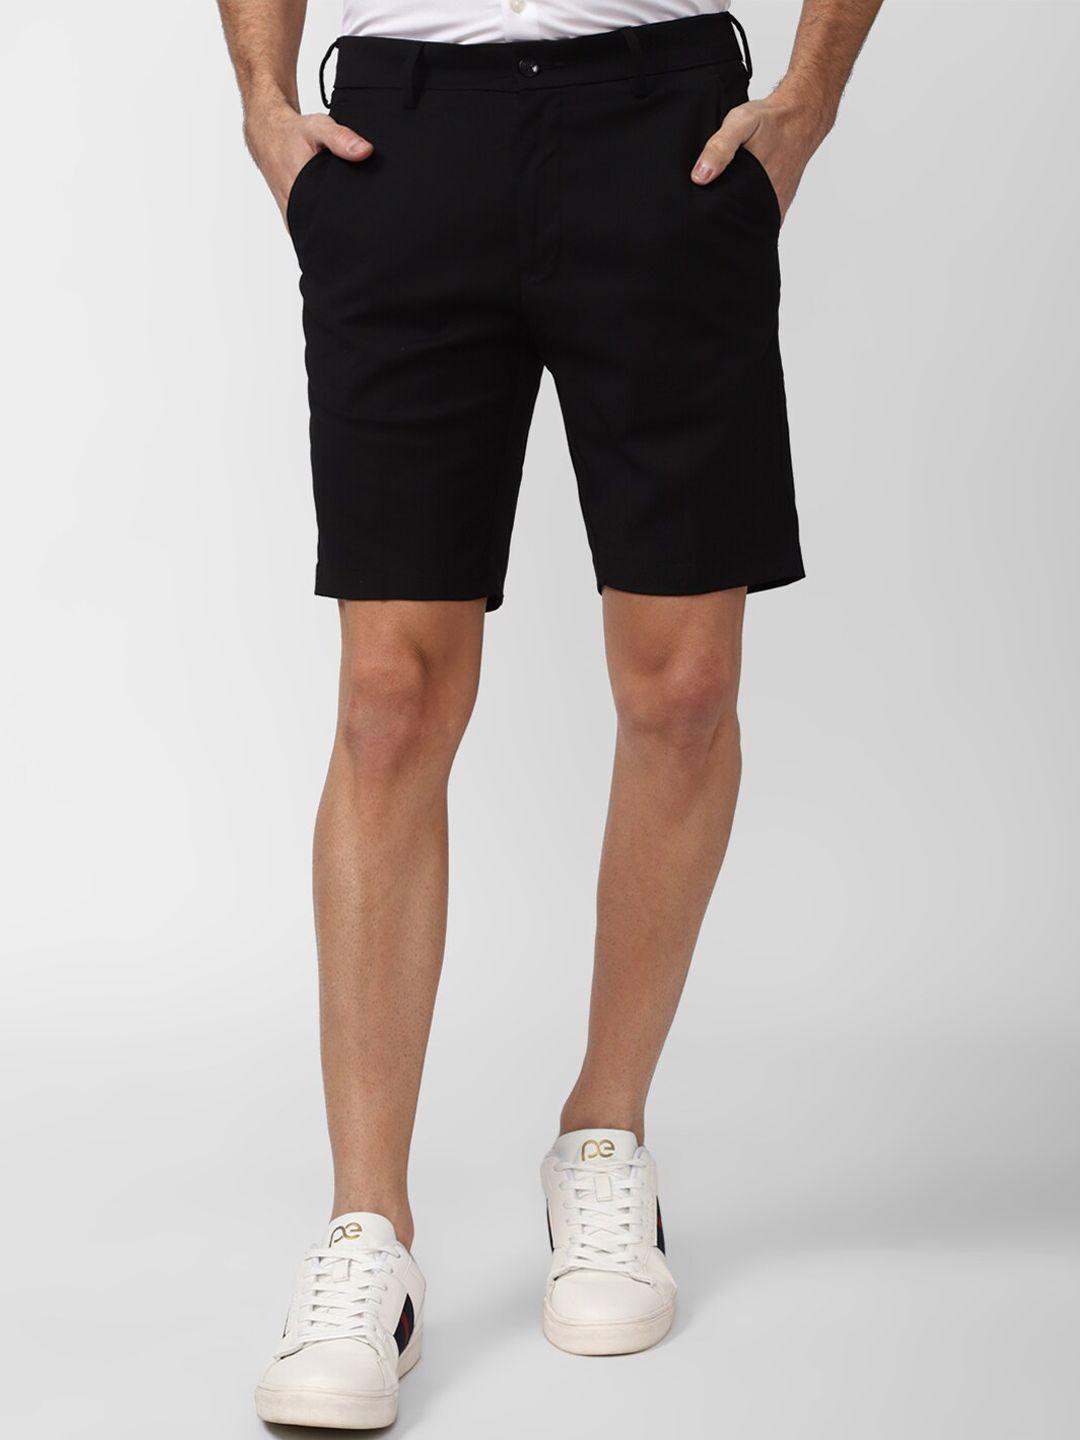 peter england men mid-rise slim fit shorts